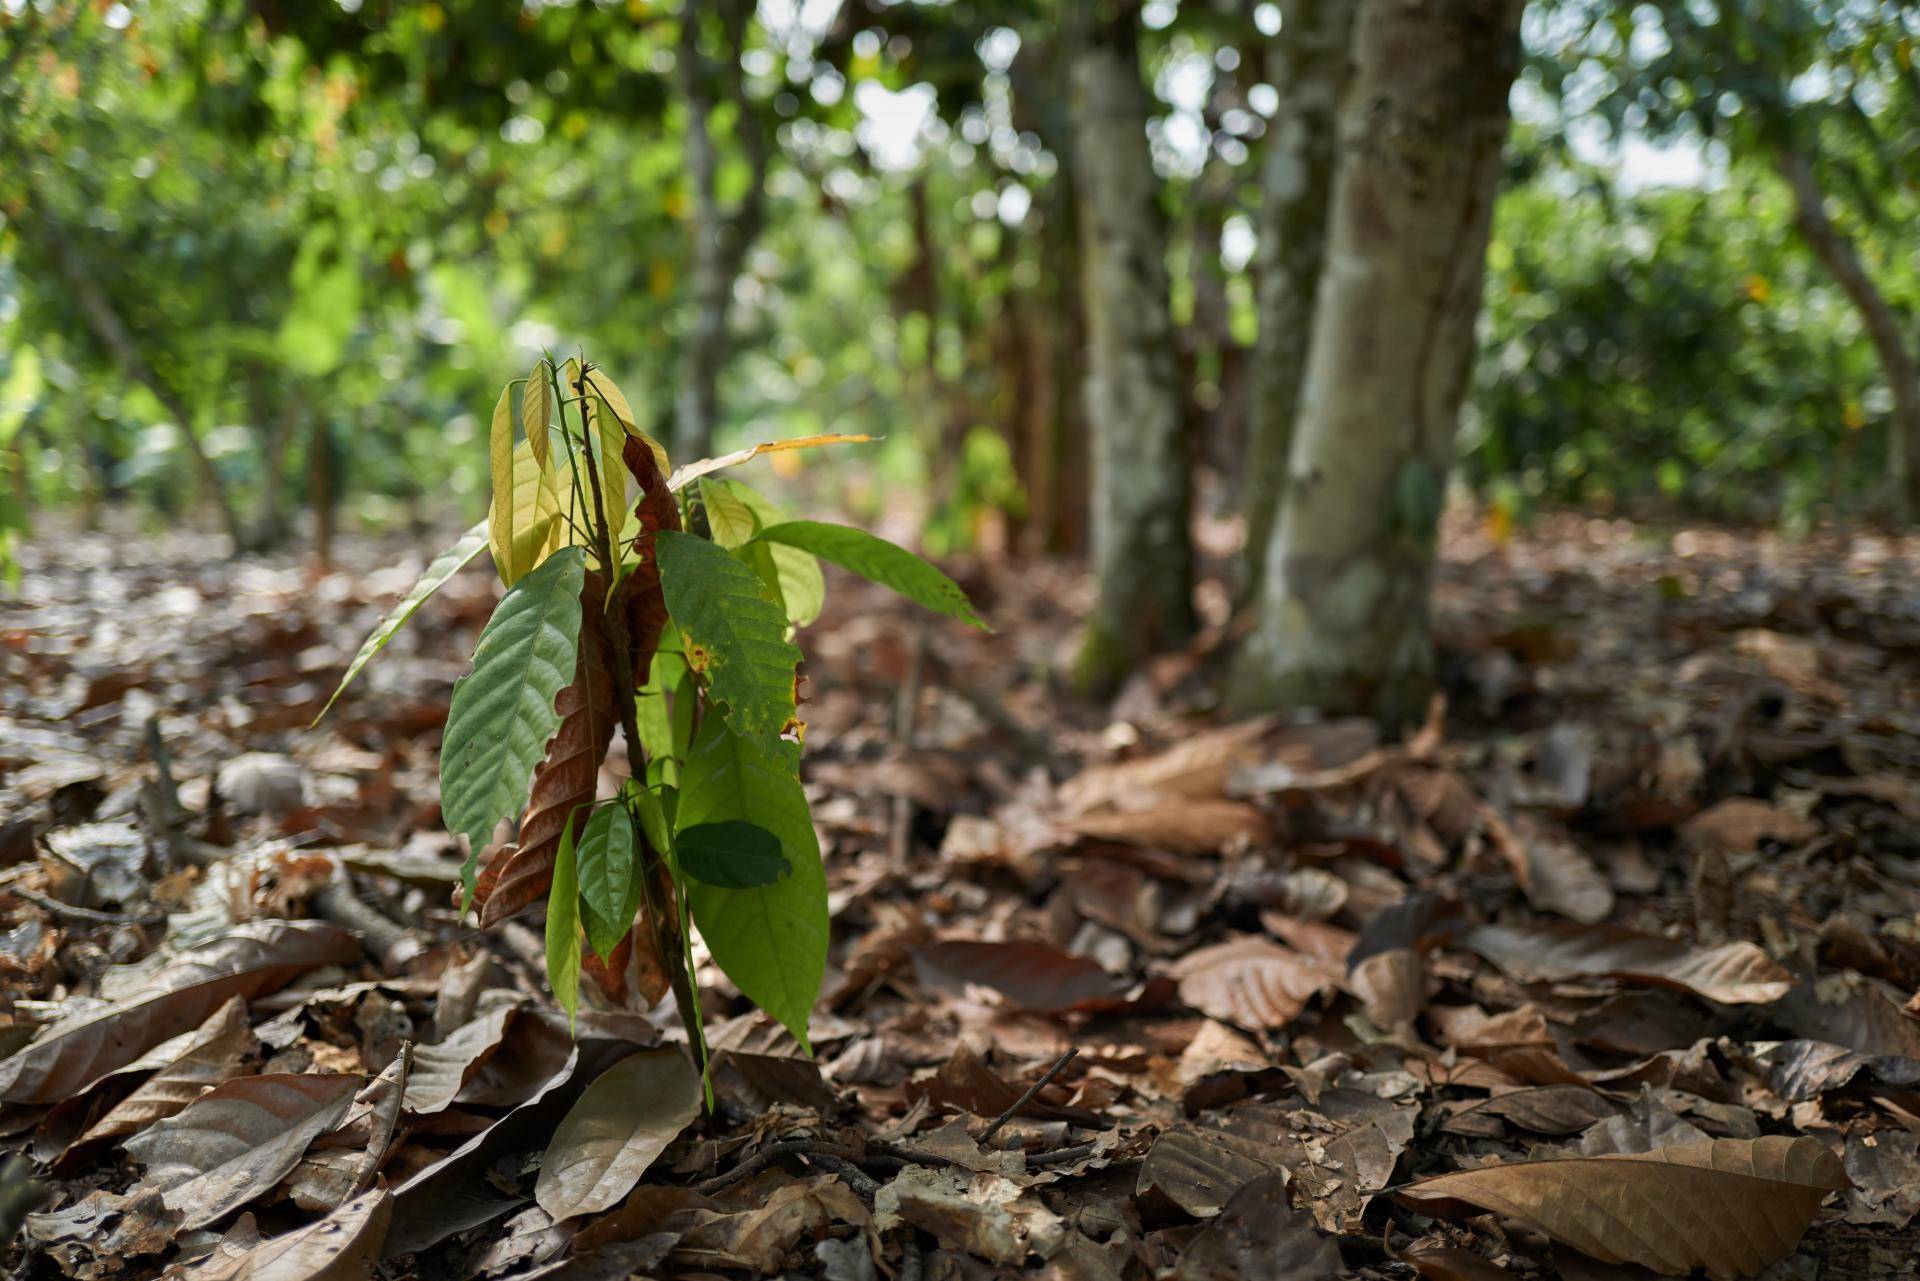 Sustainable cocoa requires biodiversity